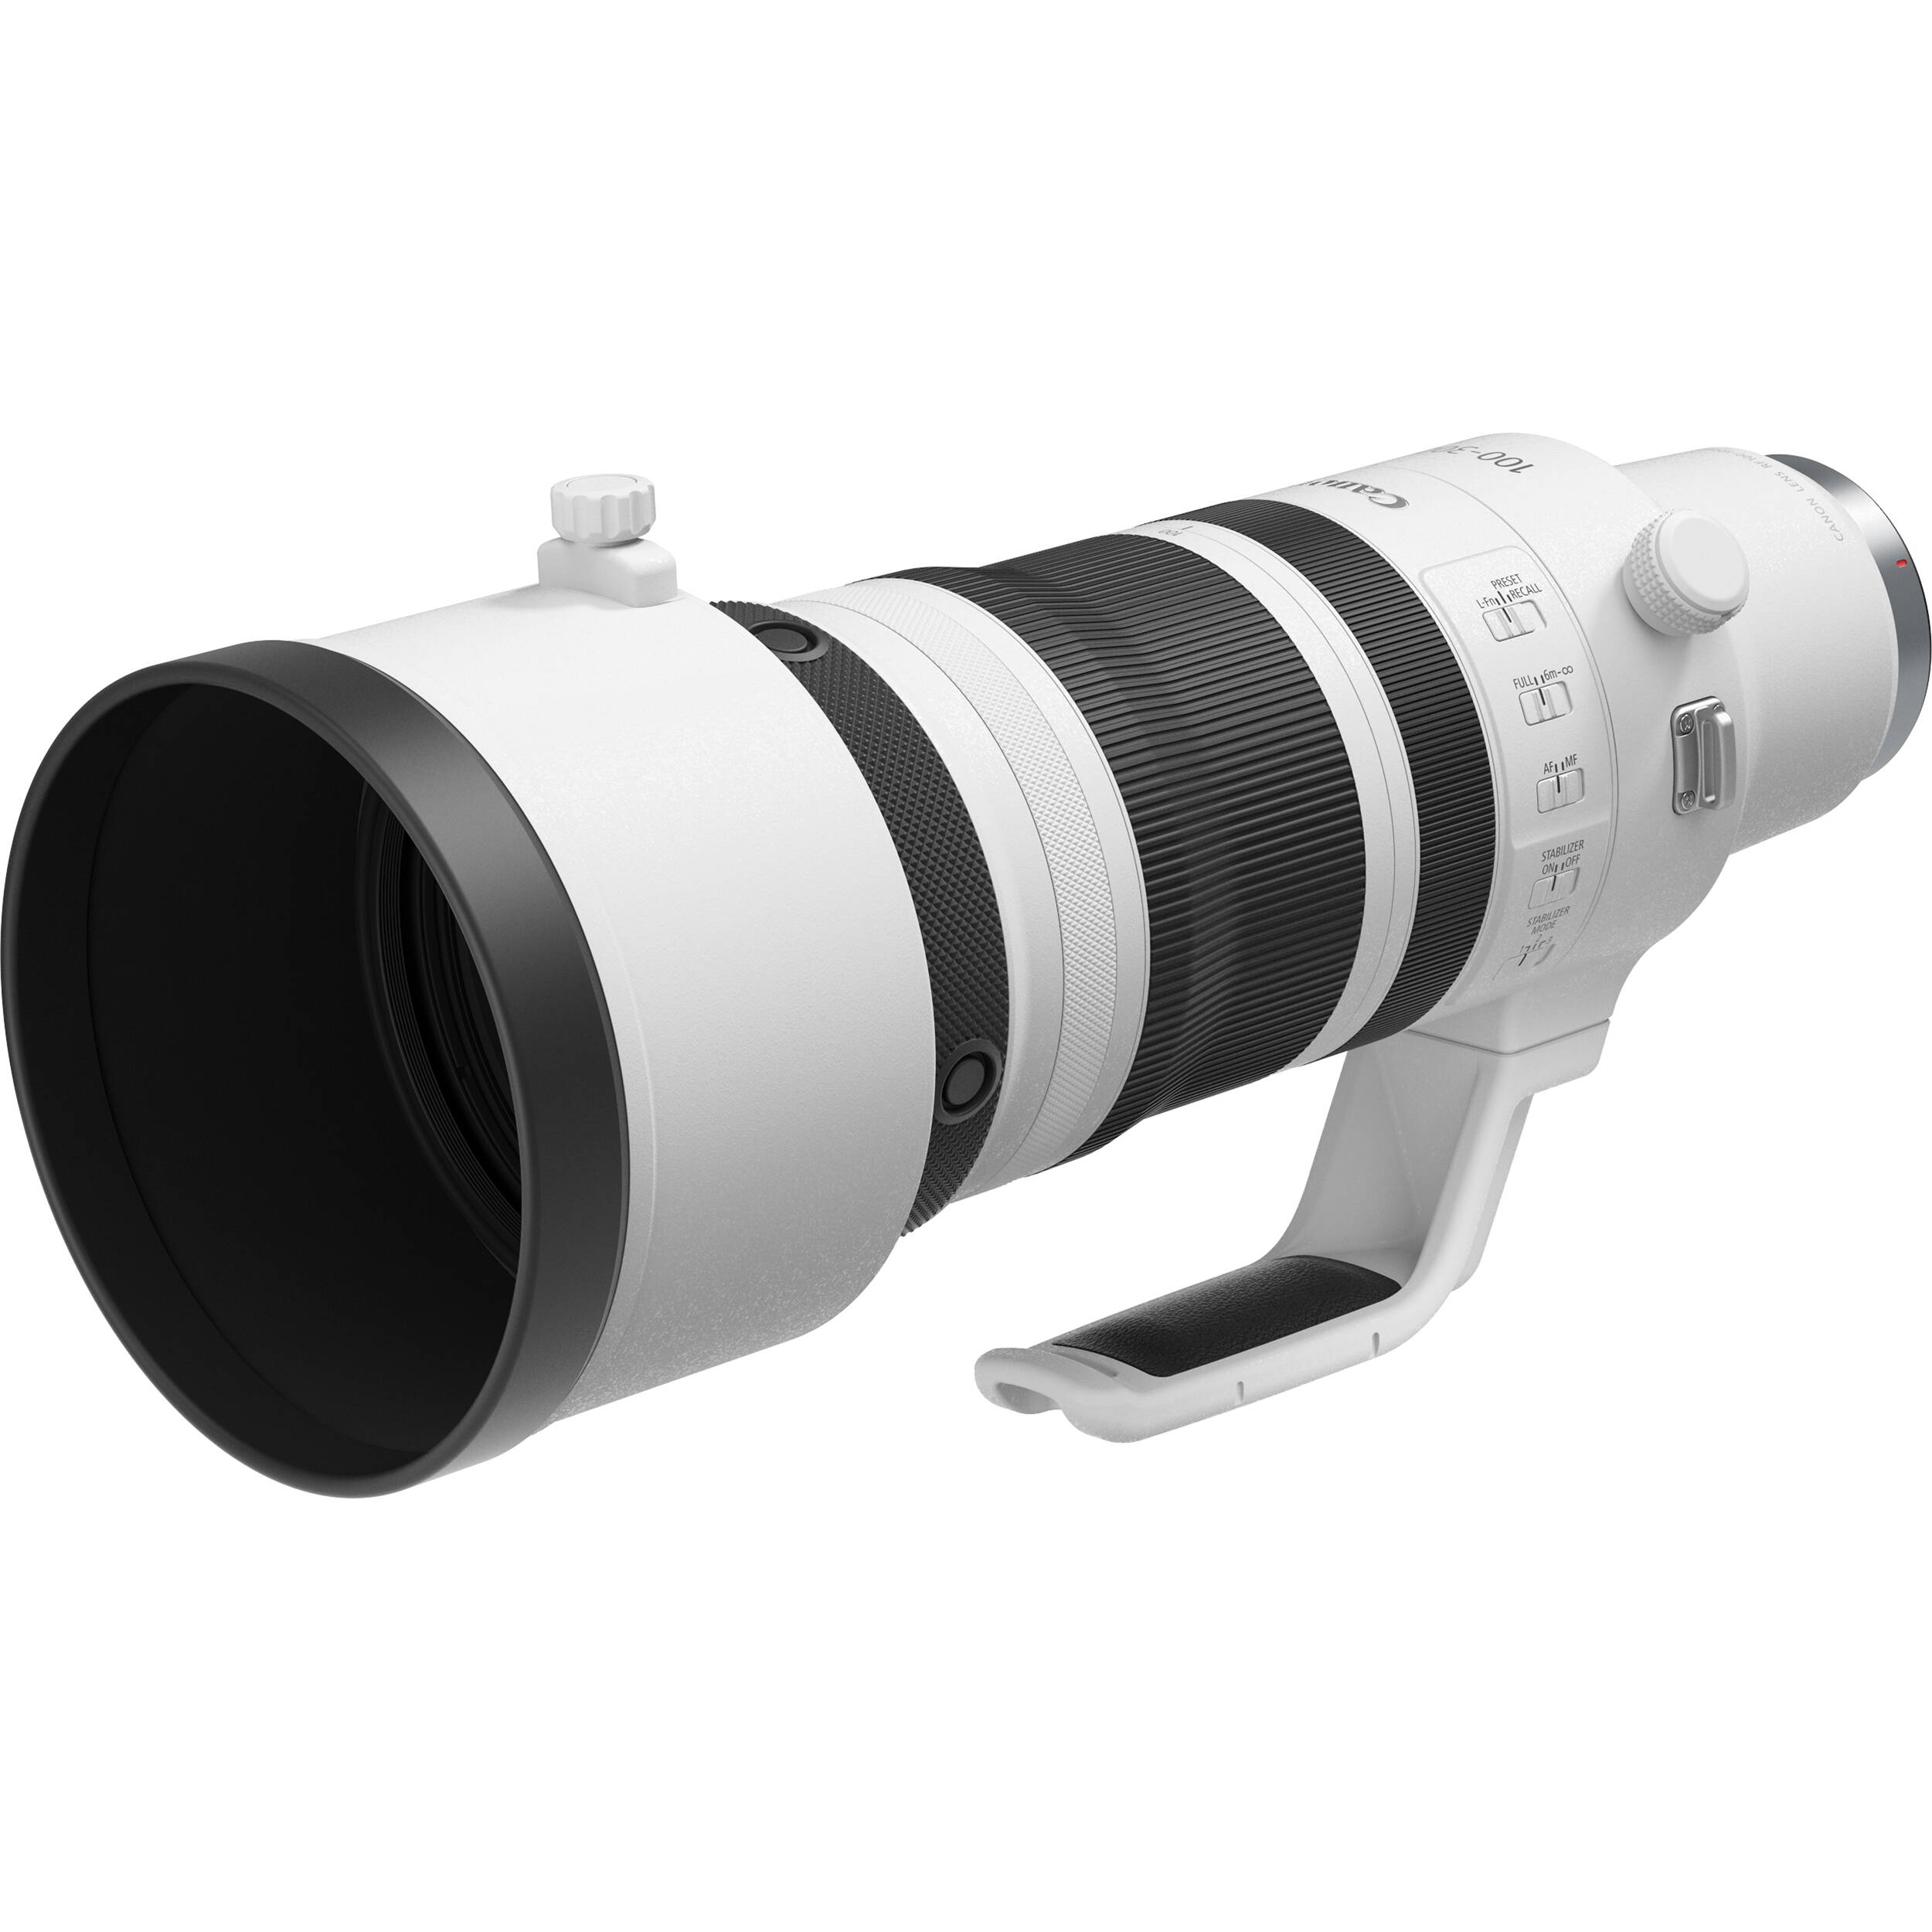 Lente teleobjetivo Canon EF 100mm f/2 USM, novedad - AliExpress